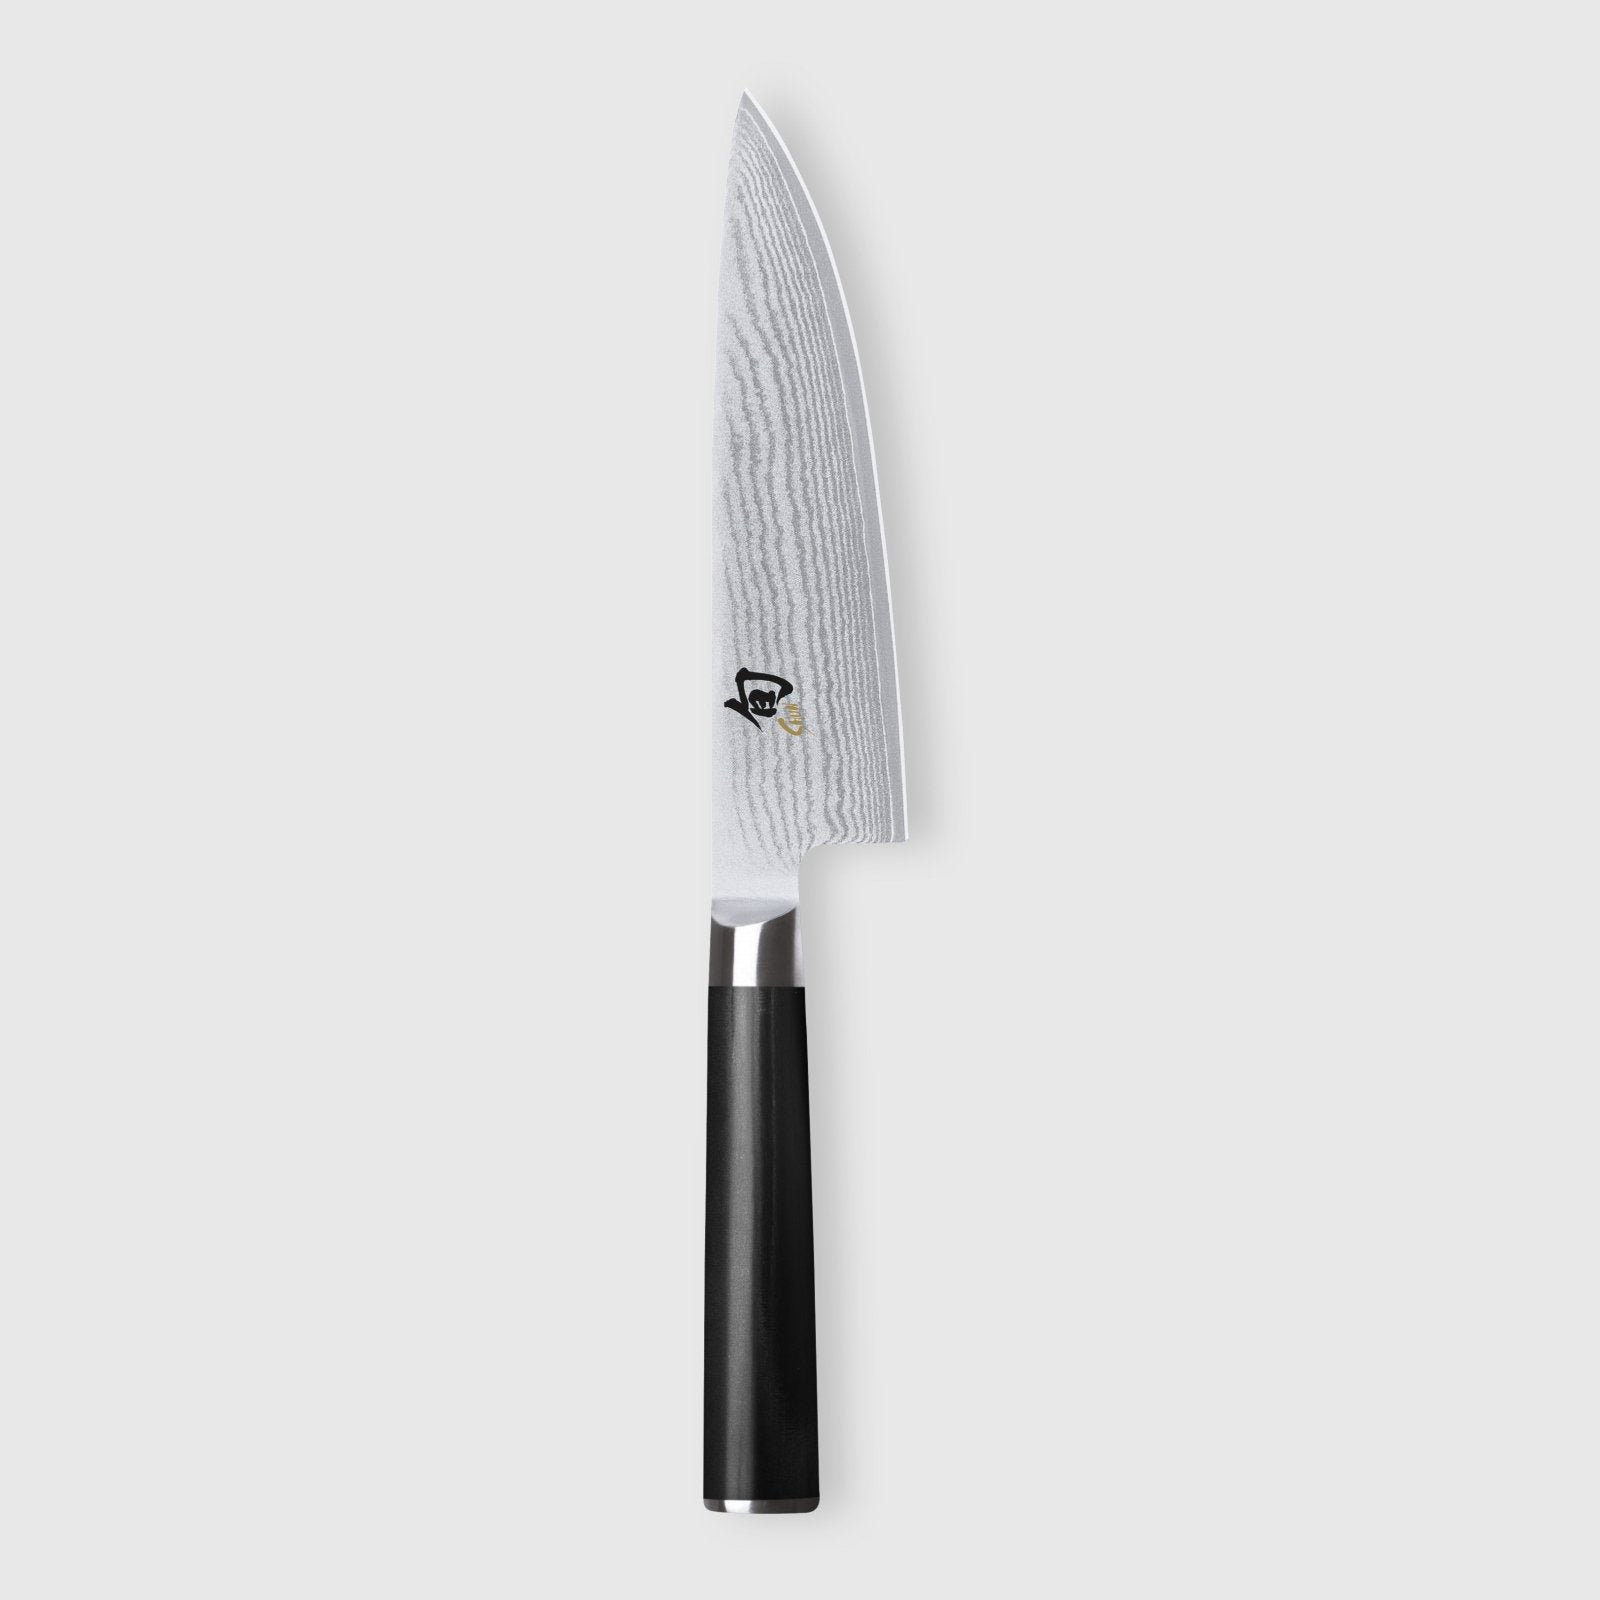 KAI Shun 15cm Chefs Knife - KAI-DM-0723 - The Cotswold Knife Company